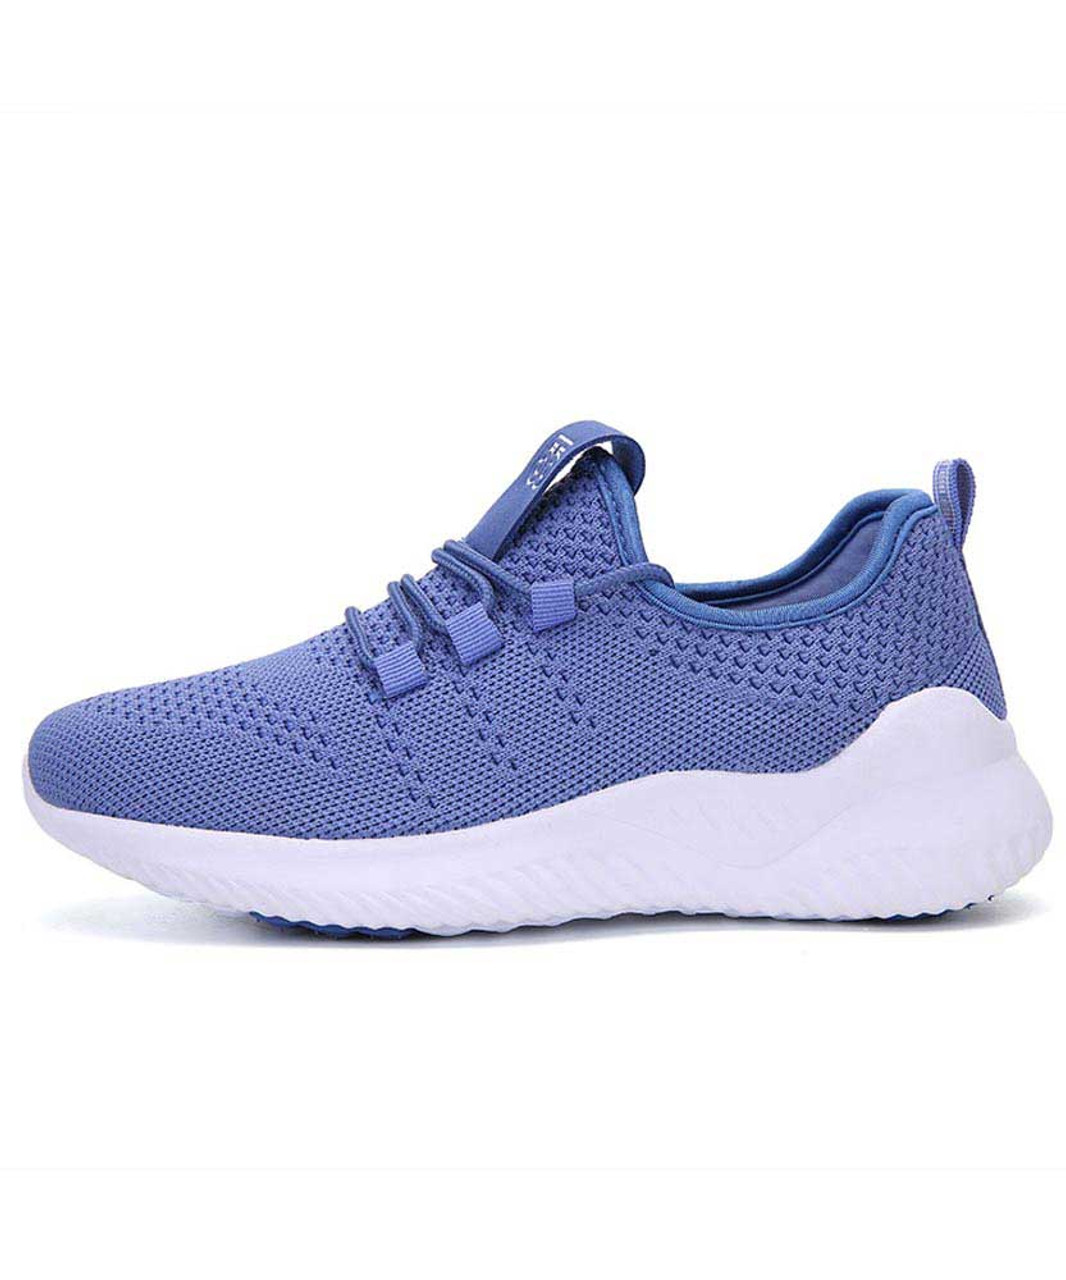 Blue number 55 print flyknit casual shoe sneaker | Womens sneakers ...